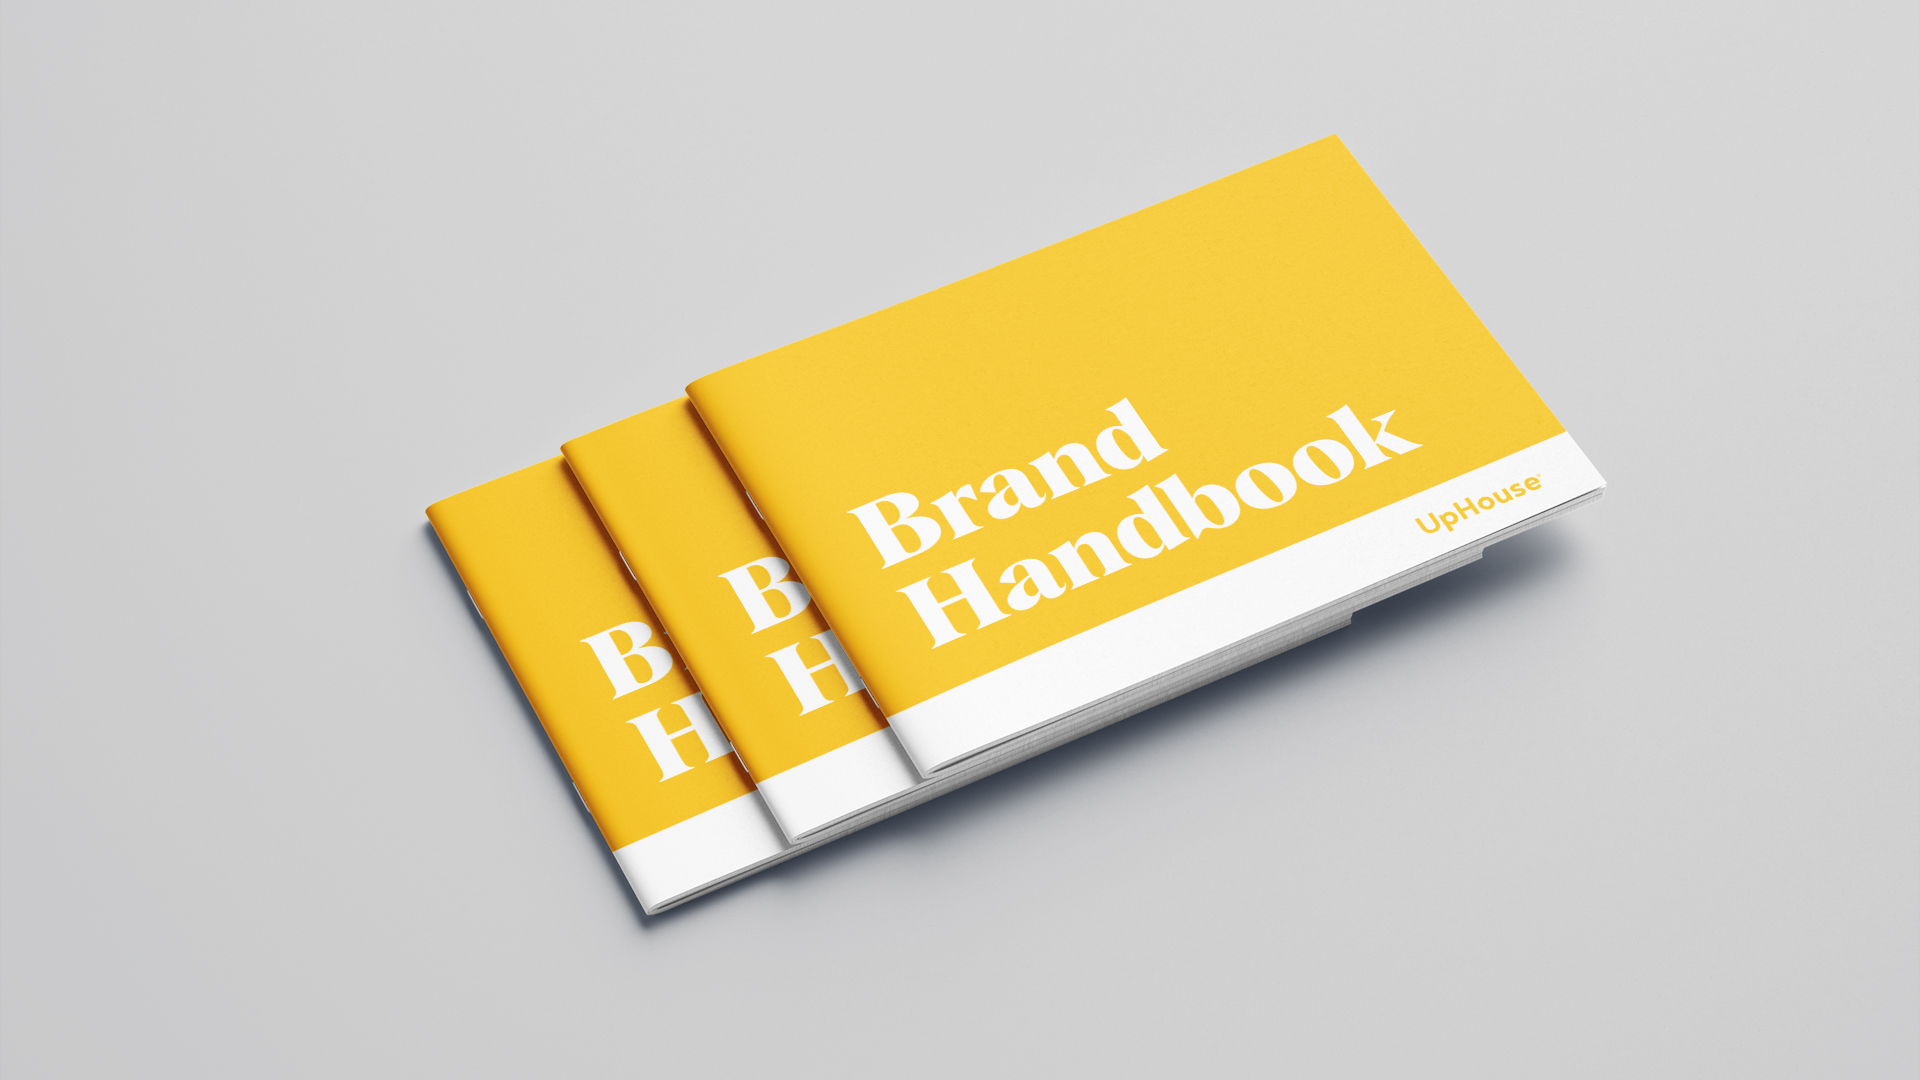 The UpHouse Brand Handbook